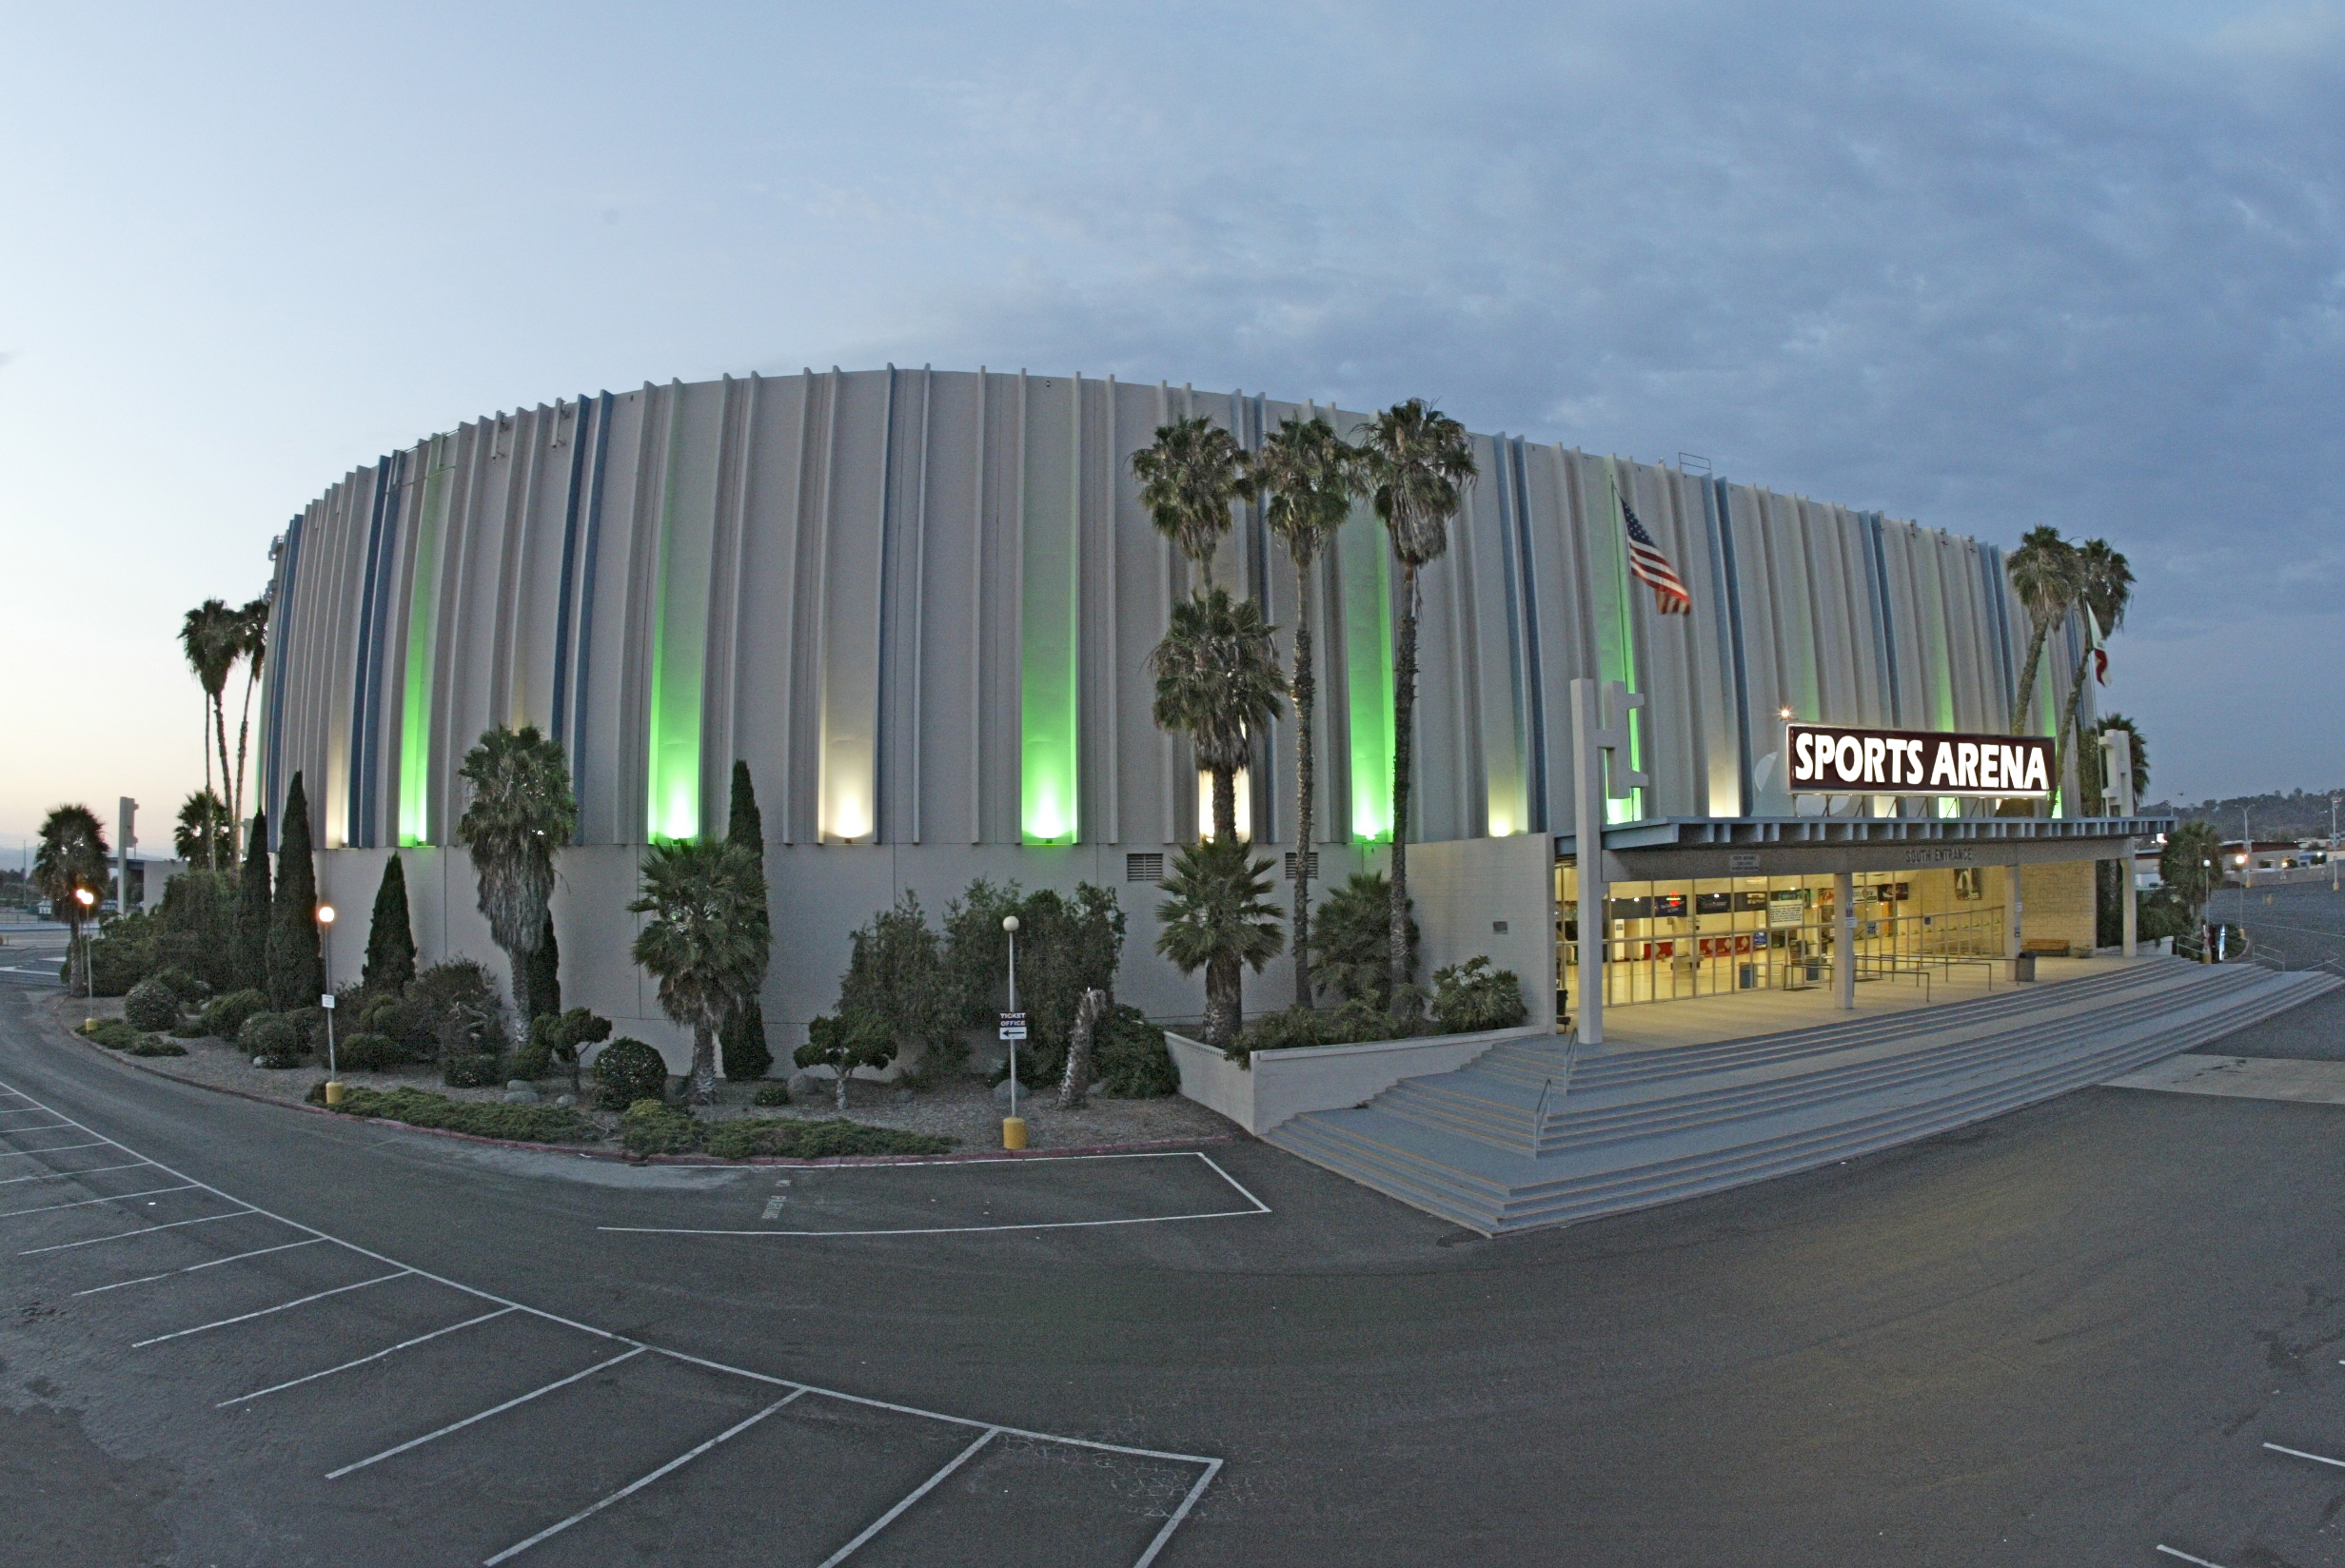 57 HQ Images San Diego Sports Arena Development San Diego, Sports